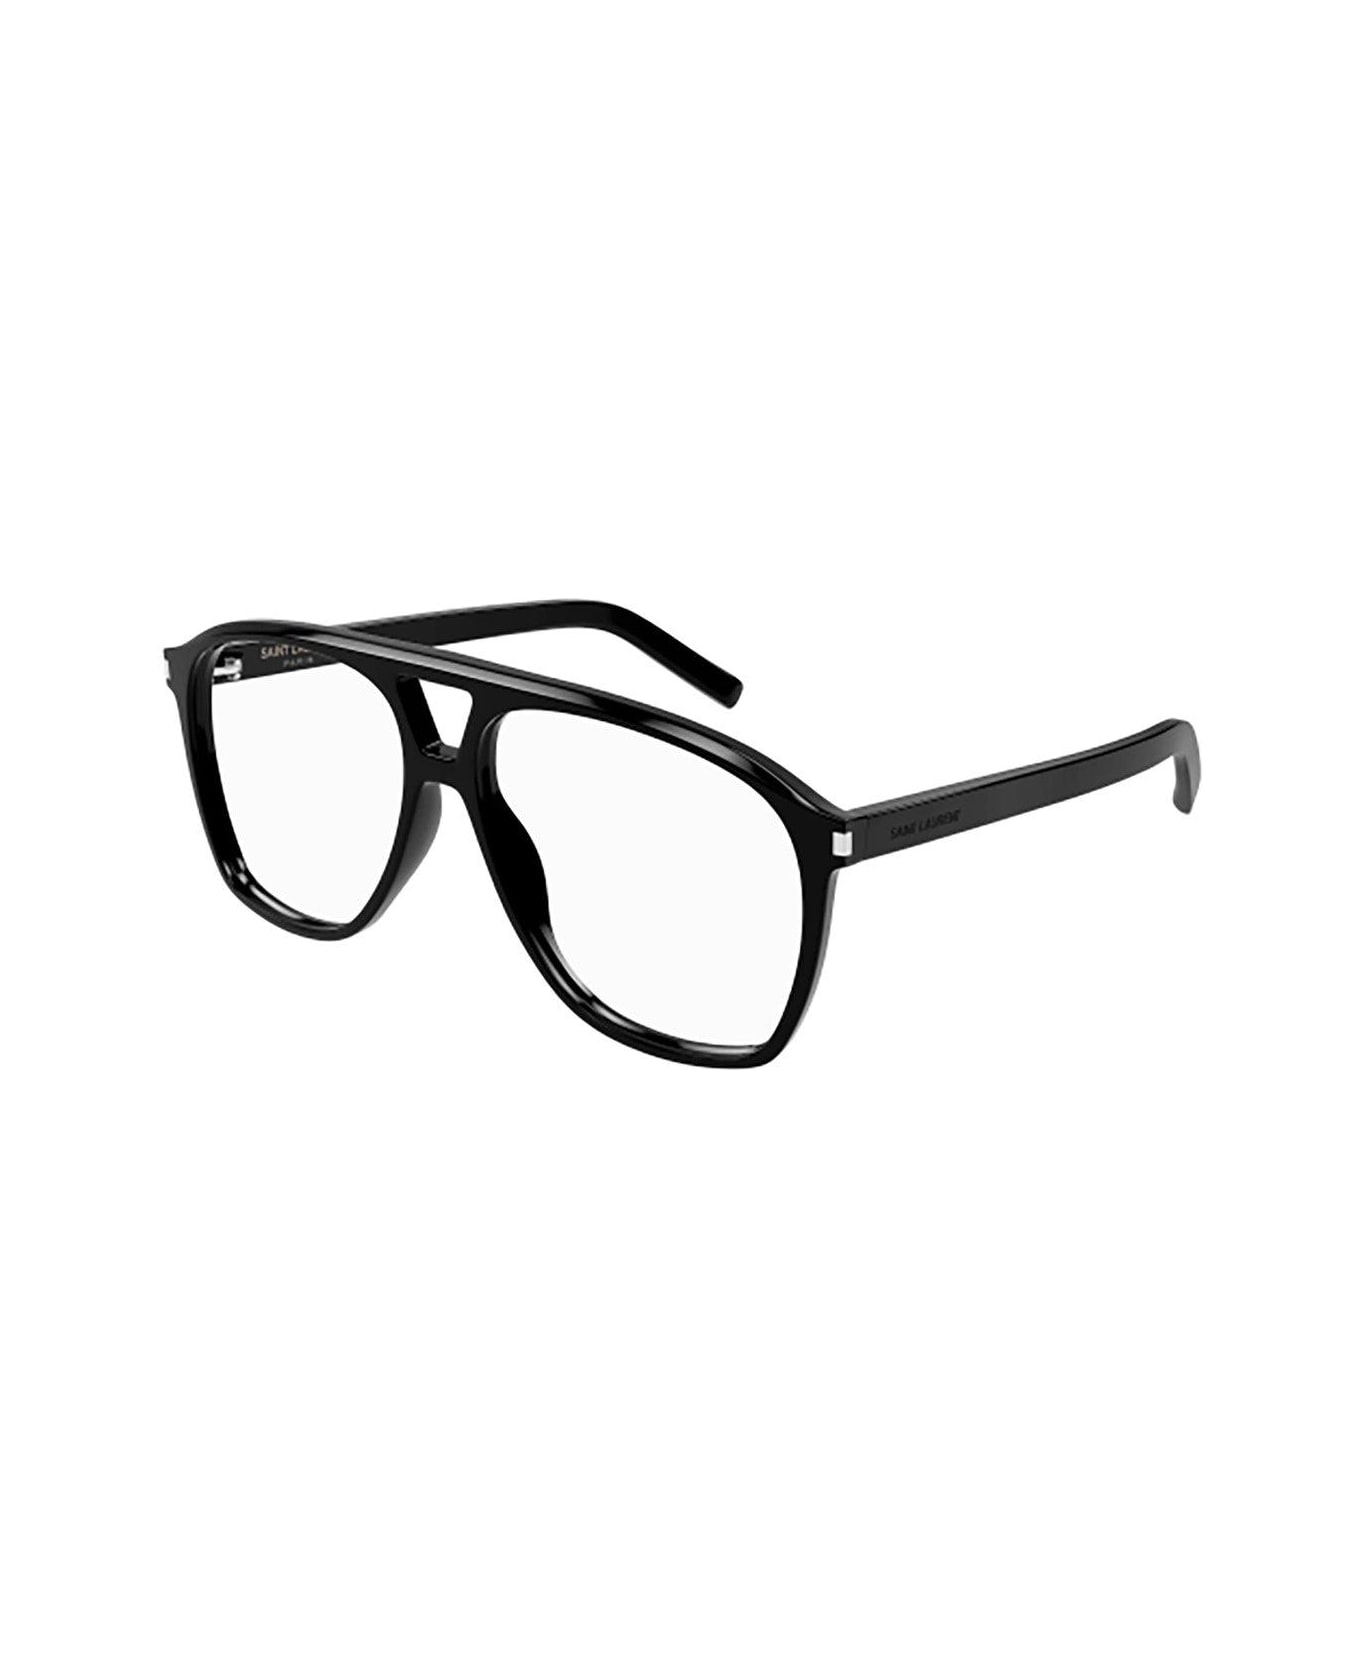 Saint Laurent Eyewear Aviator Glasses - 001 black black transpare